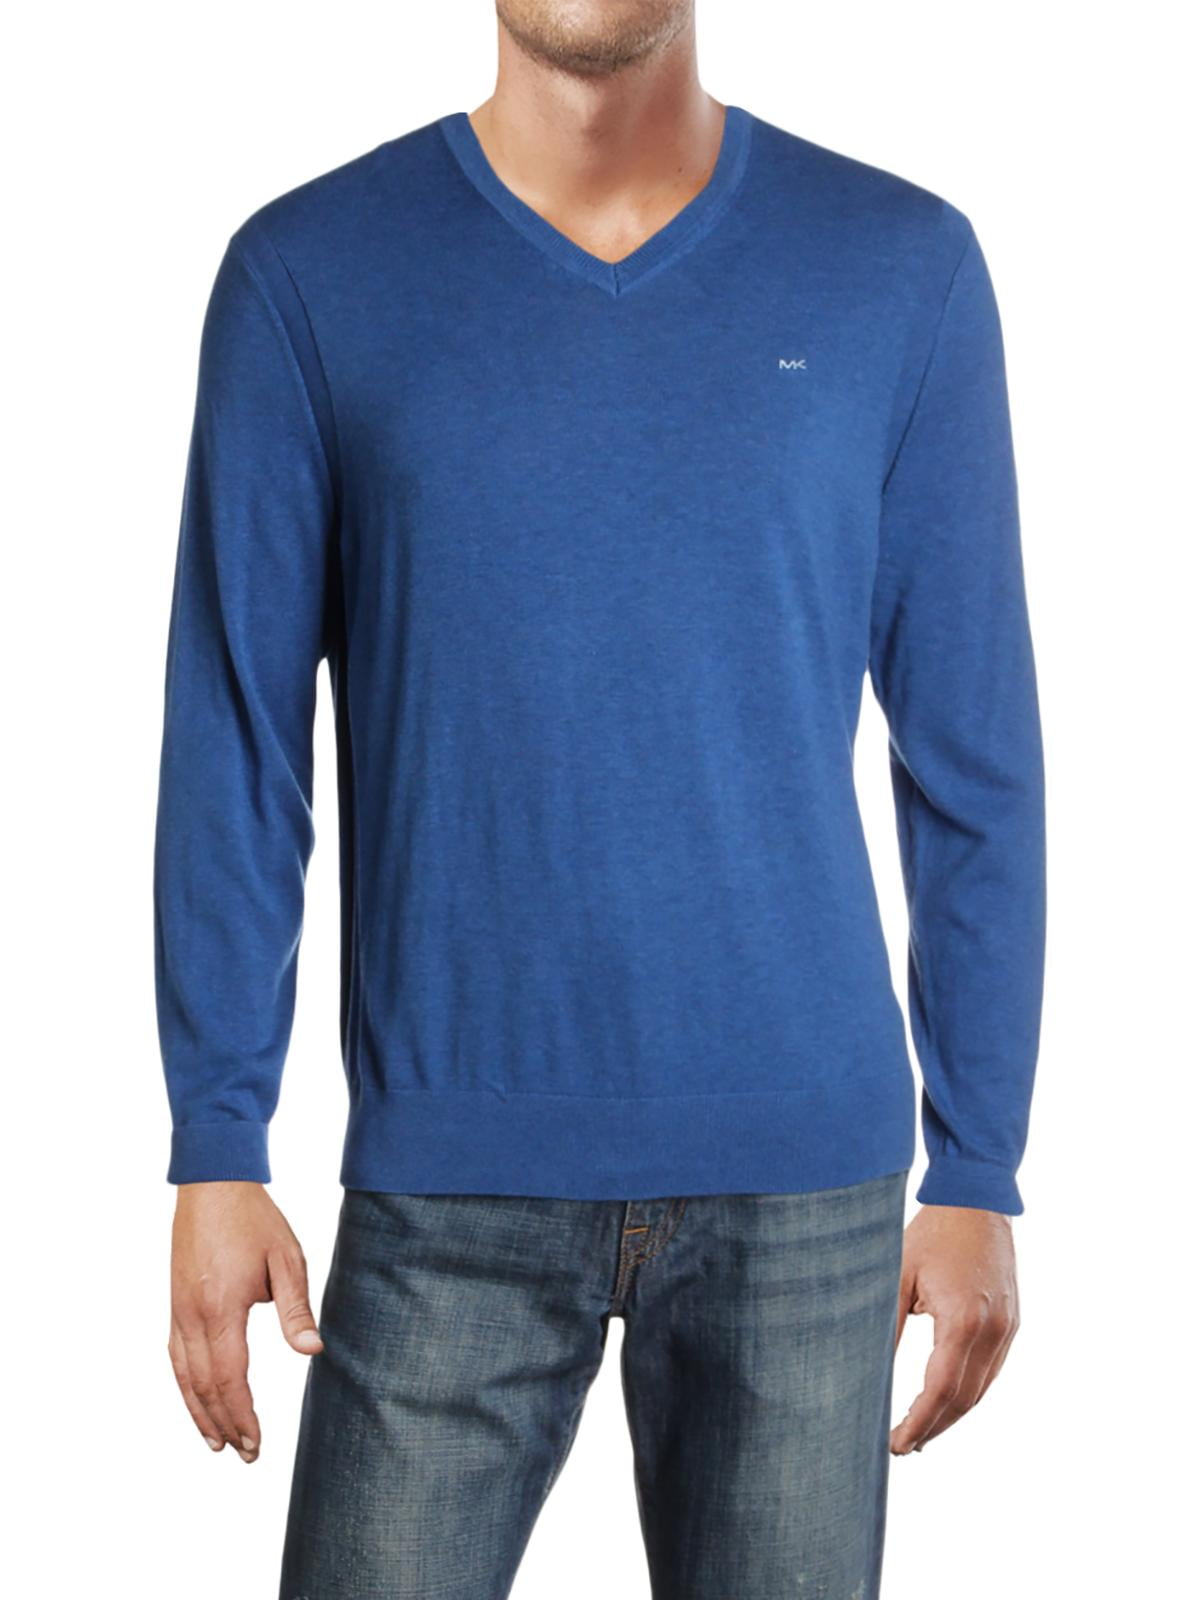 Michael Kors Mens Heathered V-Neck Pullover Sweater - Walmart.com